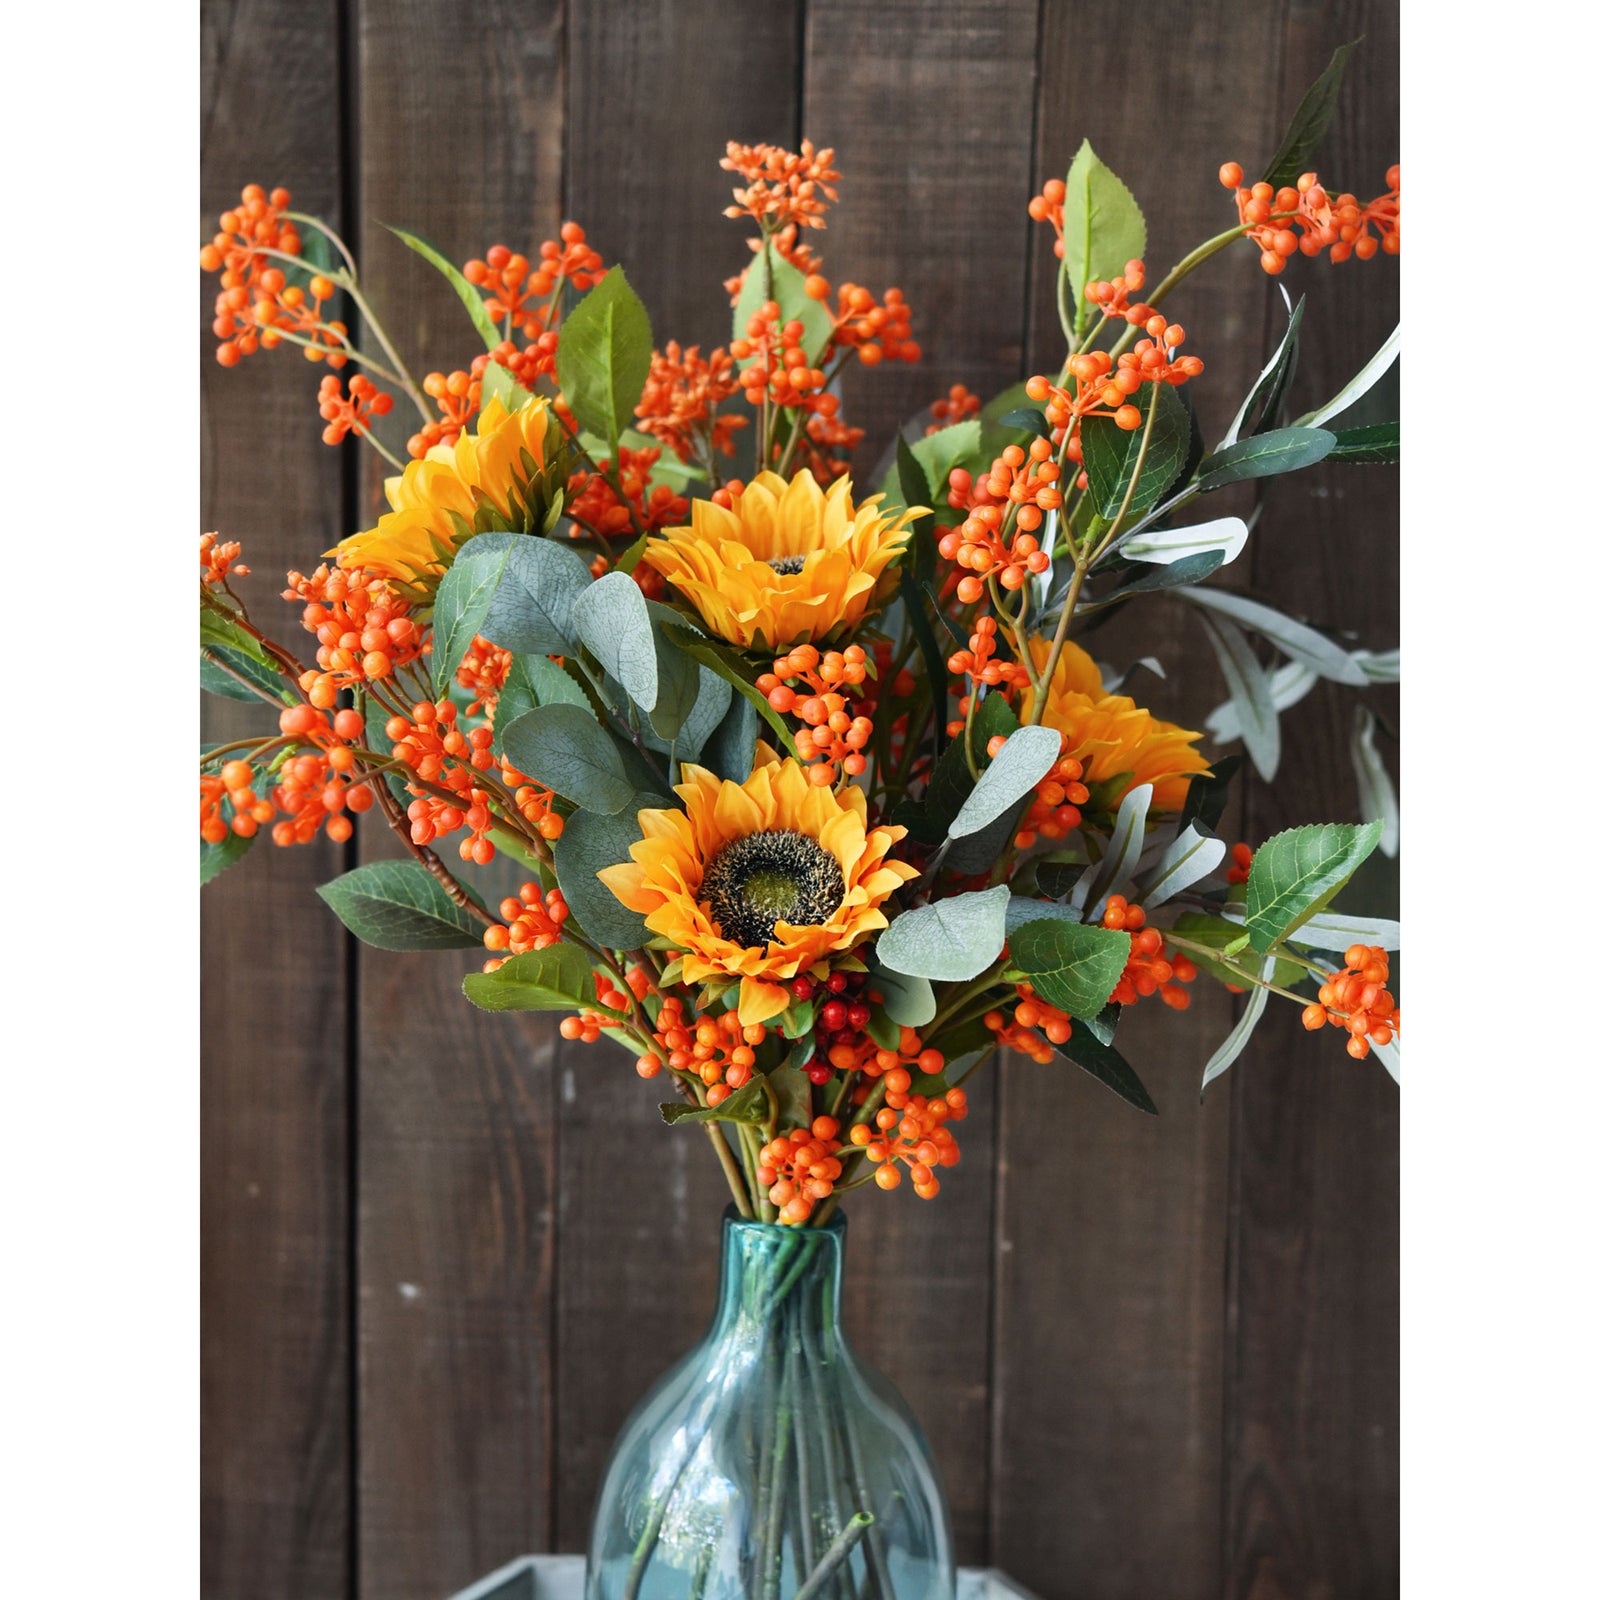 FiveSeasonStuff Artificial Fruit Orange Holly Berries Decoration for Vases, Bouquets and Floral Arrangements, 6 Berry Stems